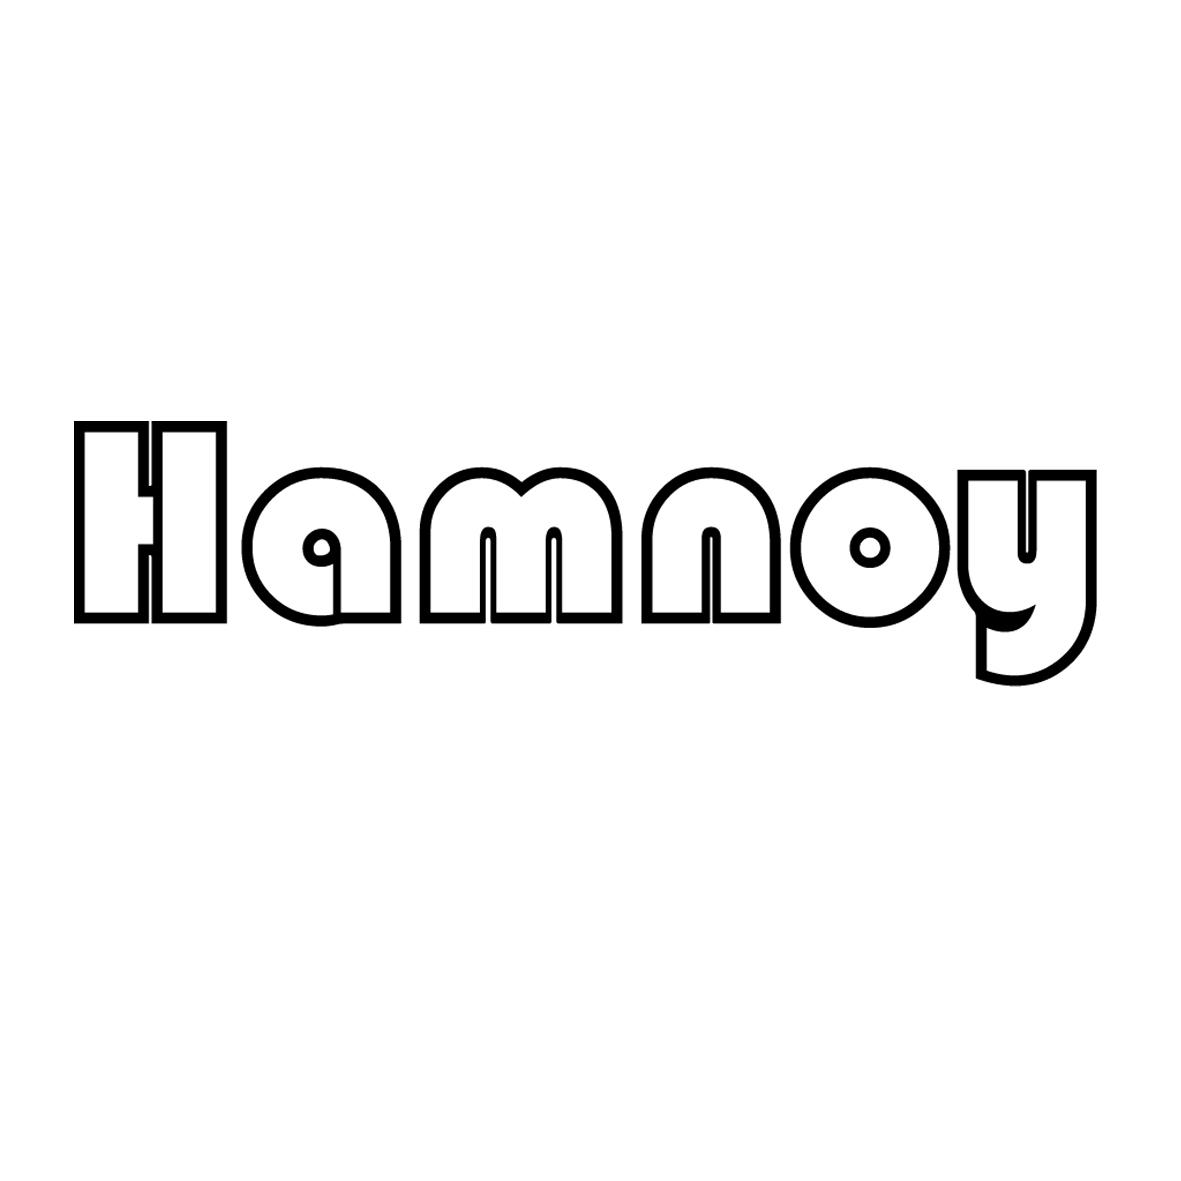 HAMNOY